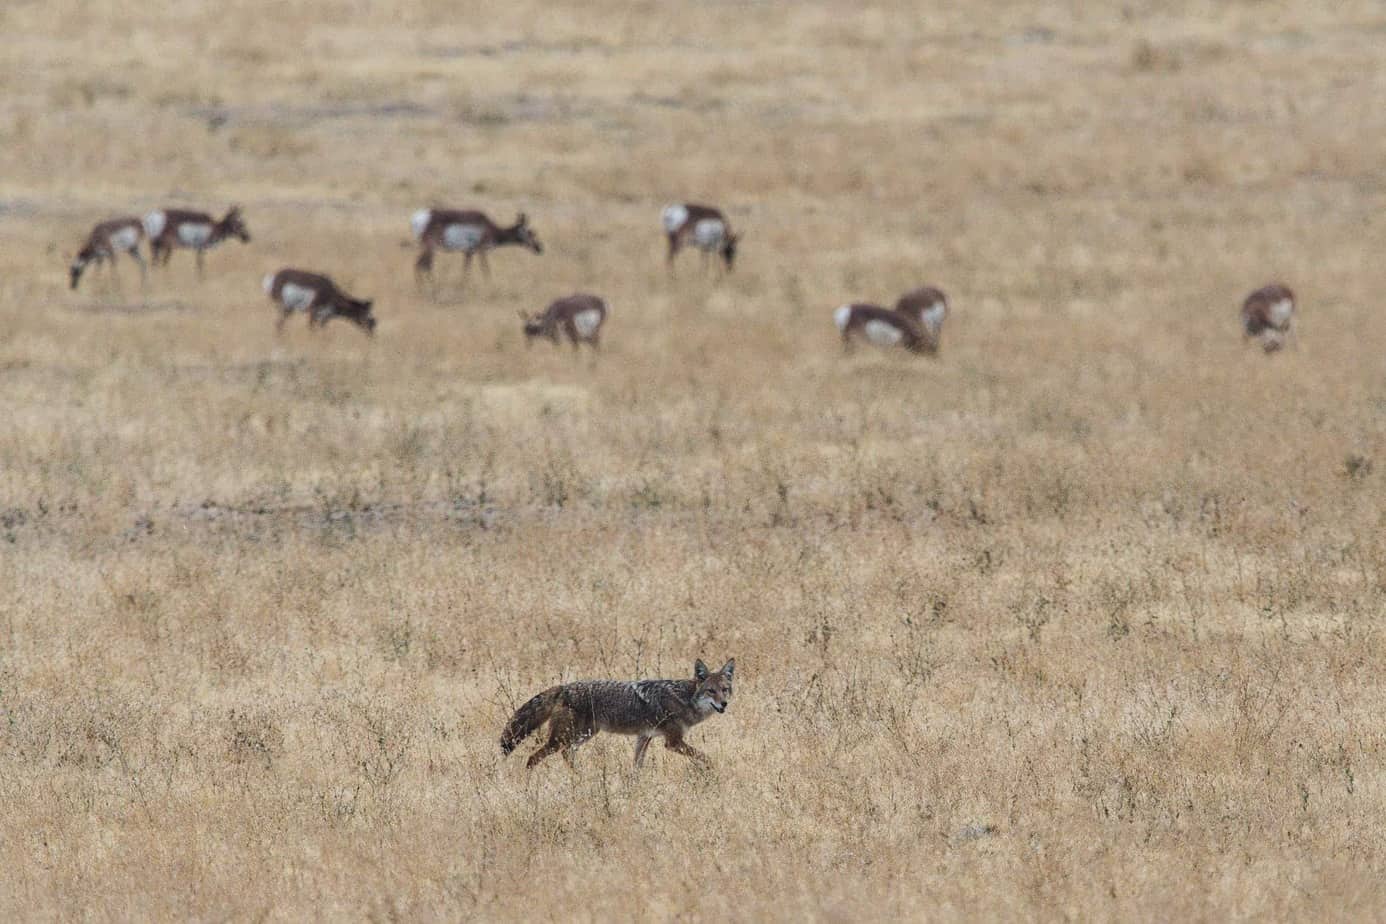 grey and brown fox on open field near herd of deer